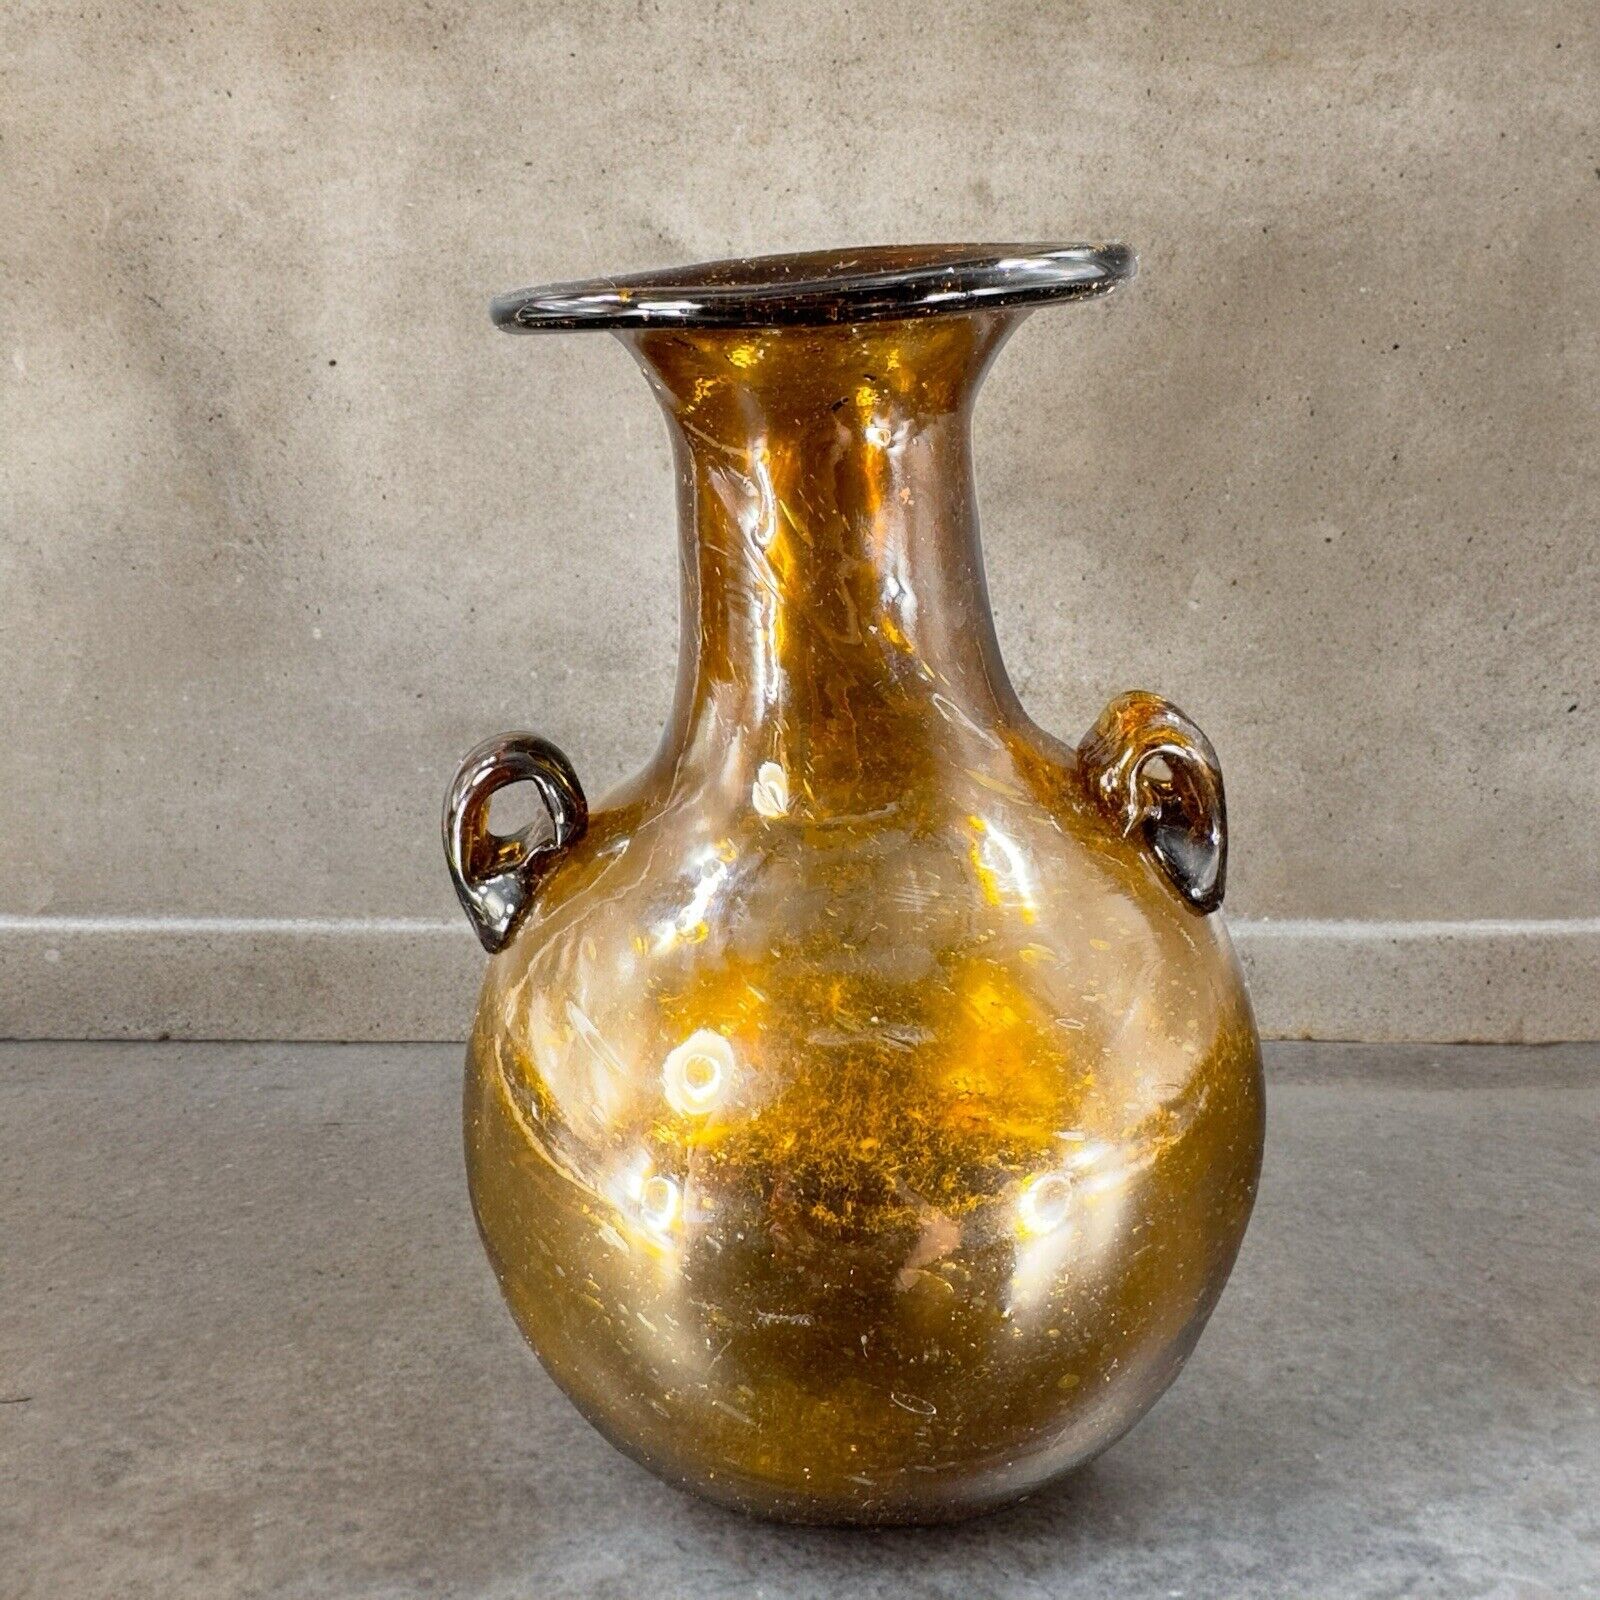 Vintage Egyptian Dark Amber Glass Vase Vessel Hand Blown With Handles Glass Vase